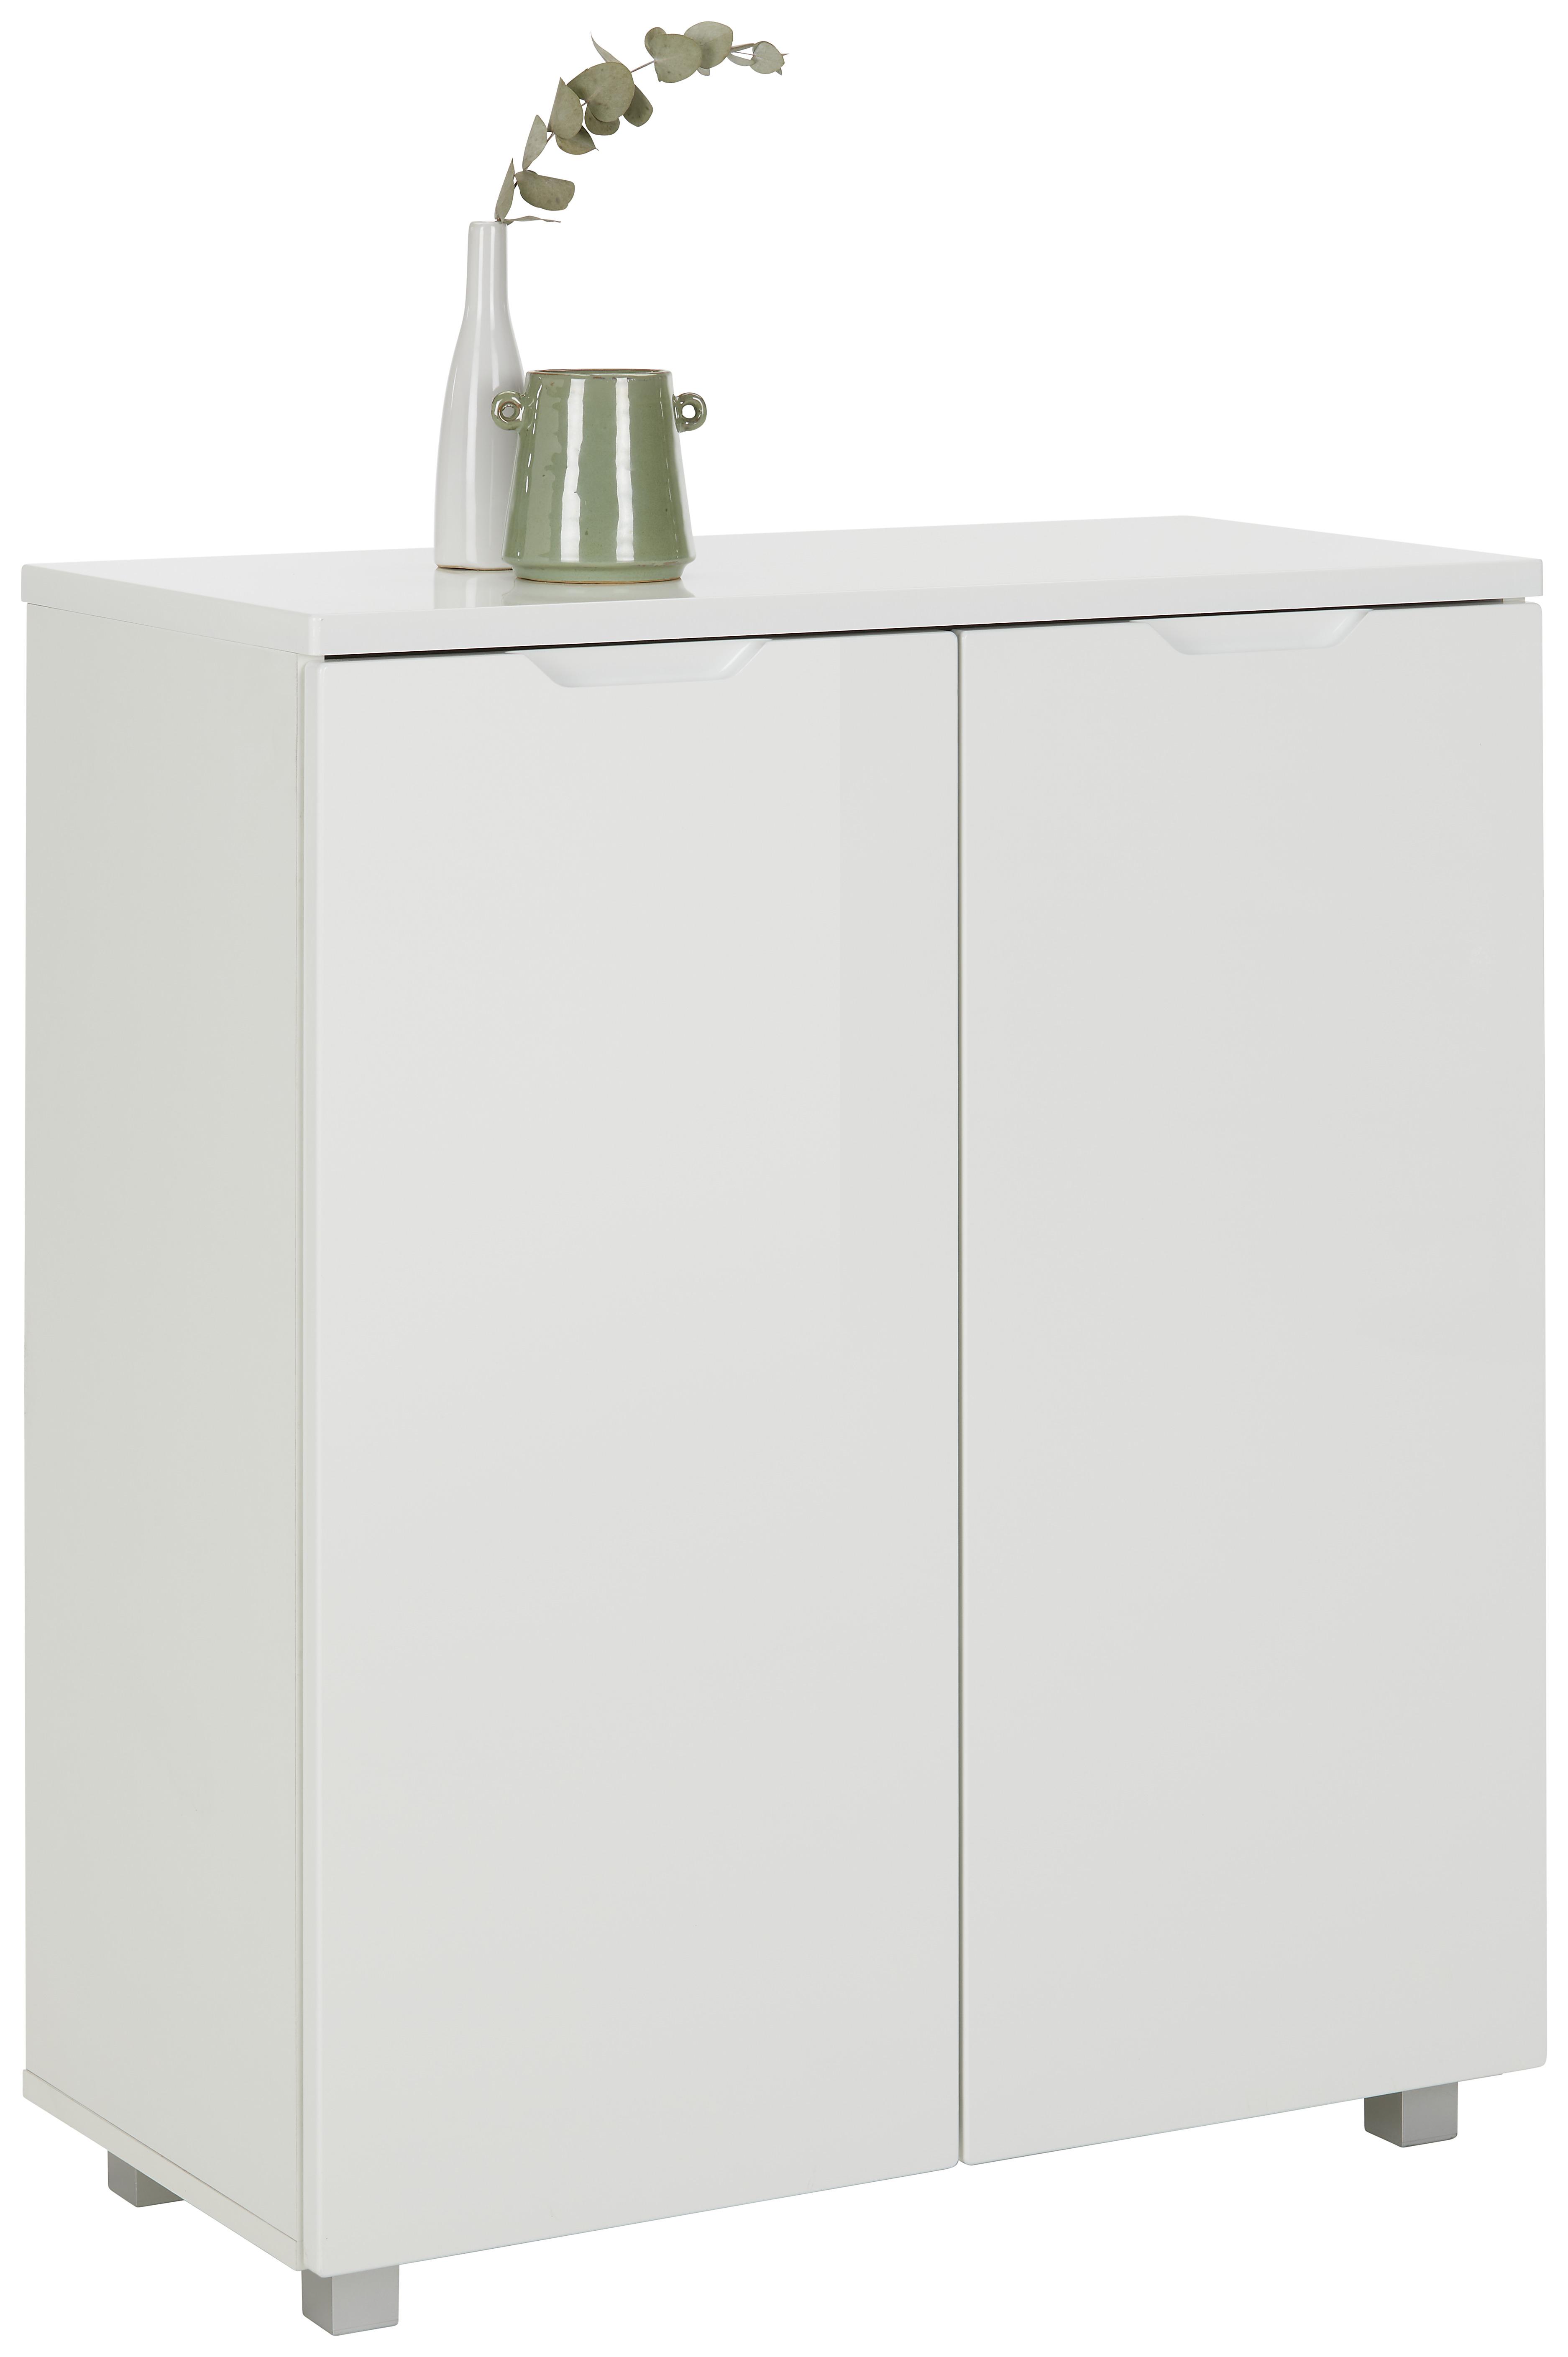 Lowboard in Weiß - Silberfarben/Weiß, MODERN, Holzwerkstoff/Kunststoff (80/90/38cm) - Modern Living